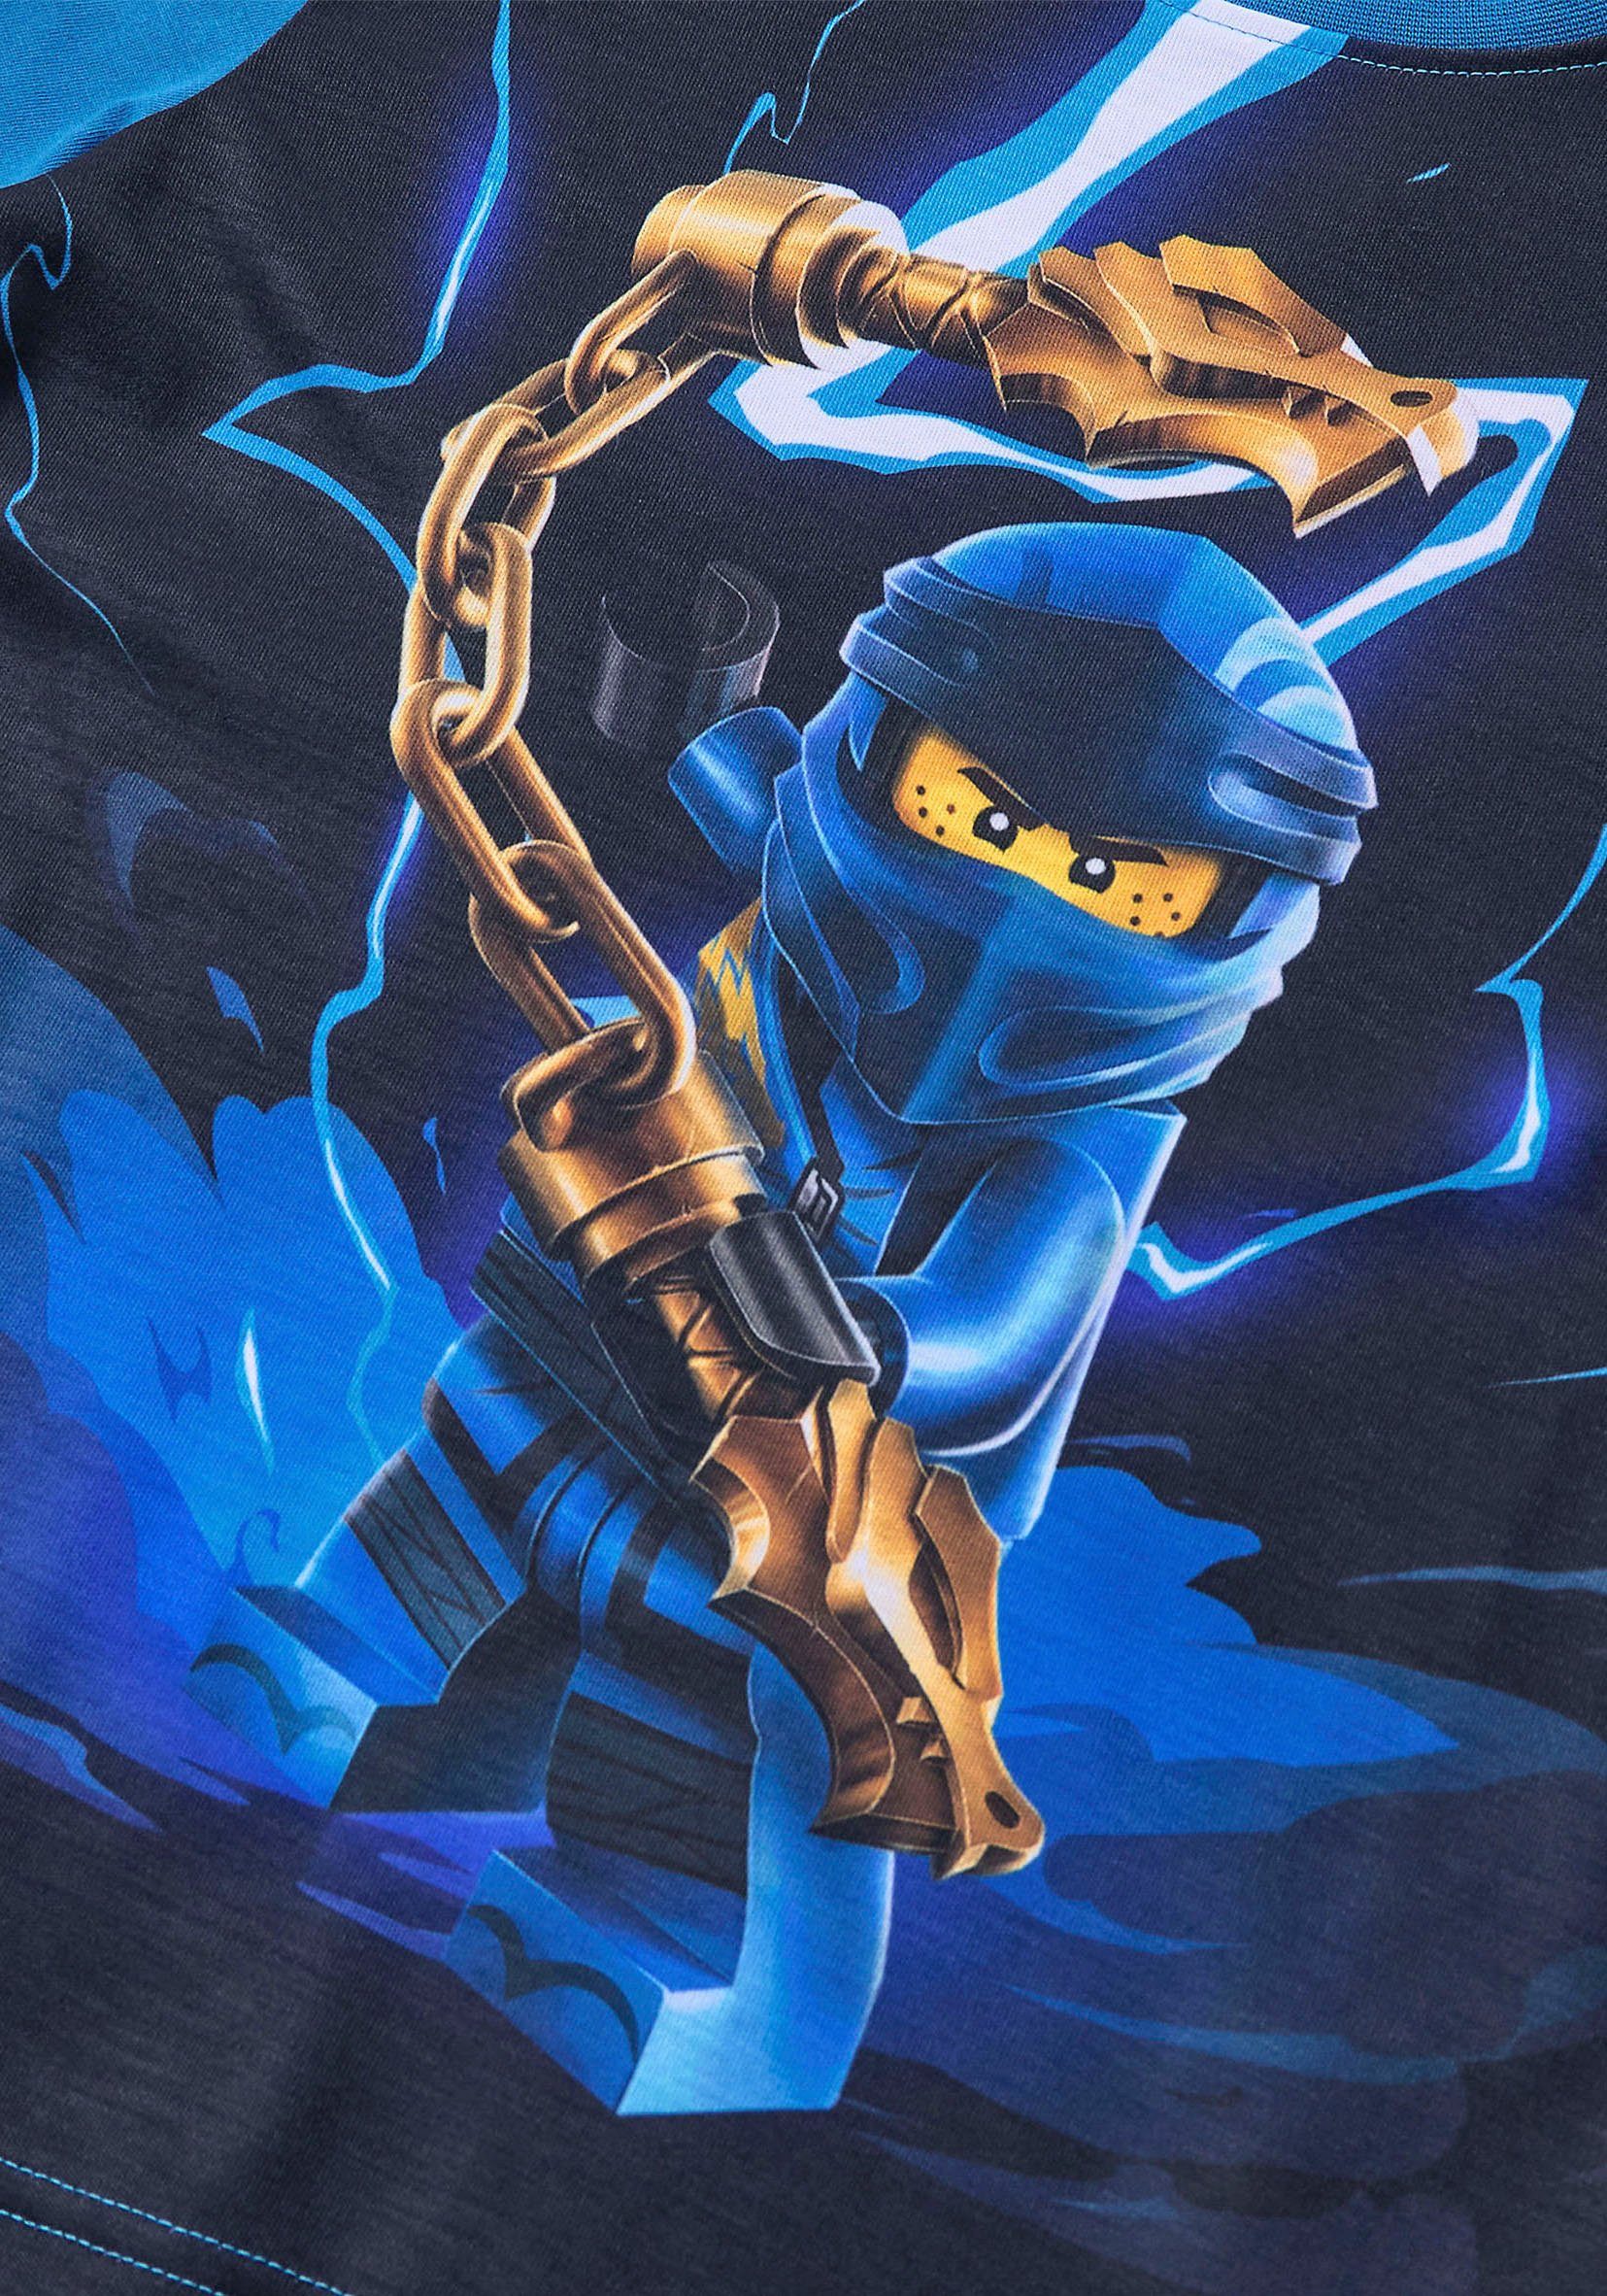 LEGO® Wear T-Shirt mit coolem blue Frontprint middle